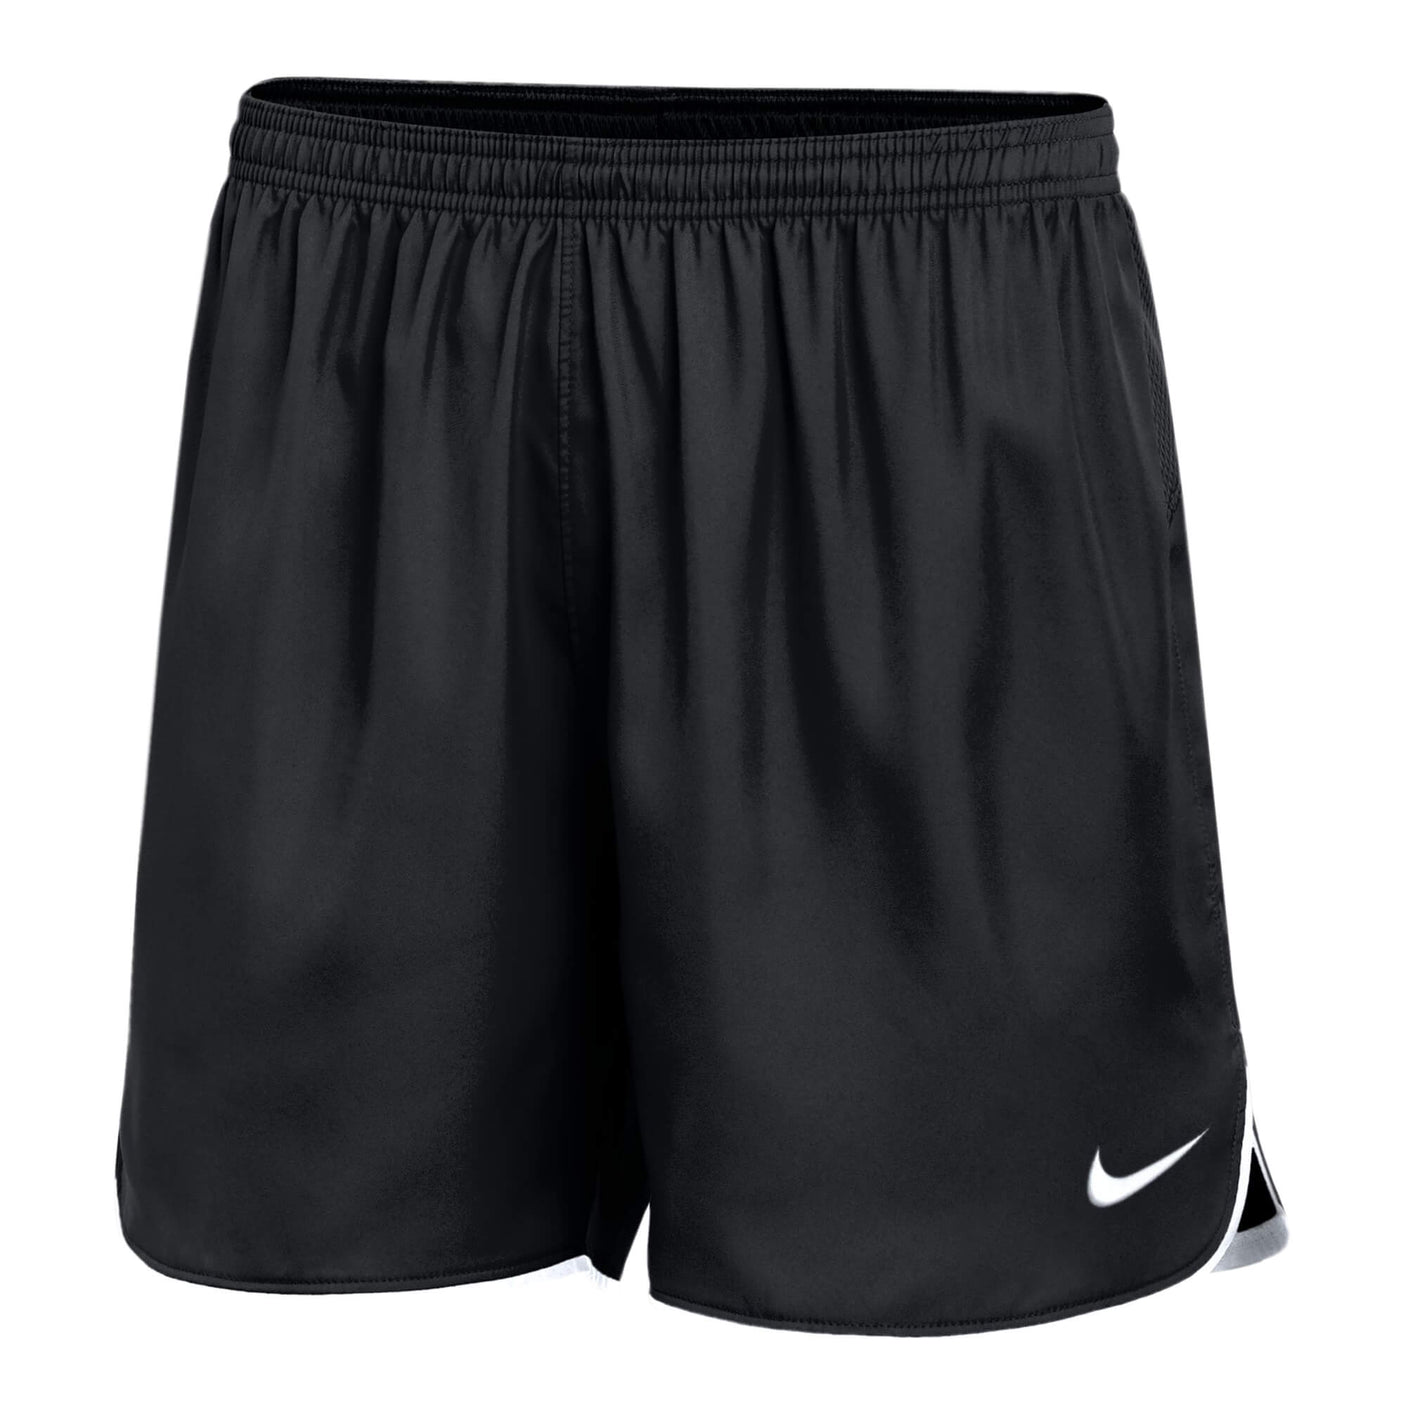 Nike Women's Laser IV Woven Shorts Black/White Front